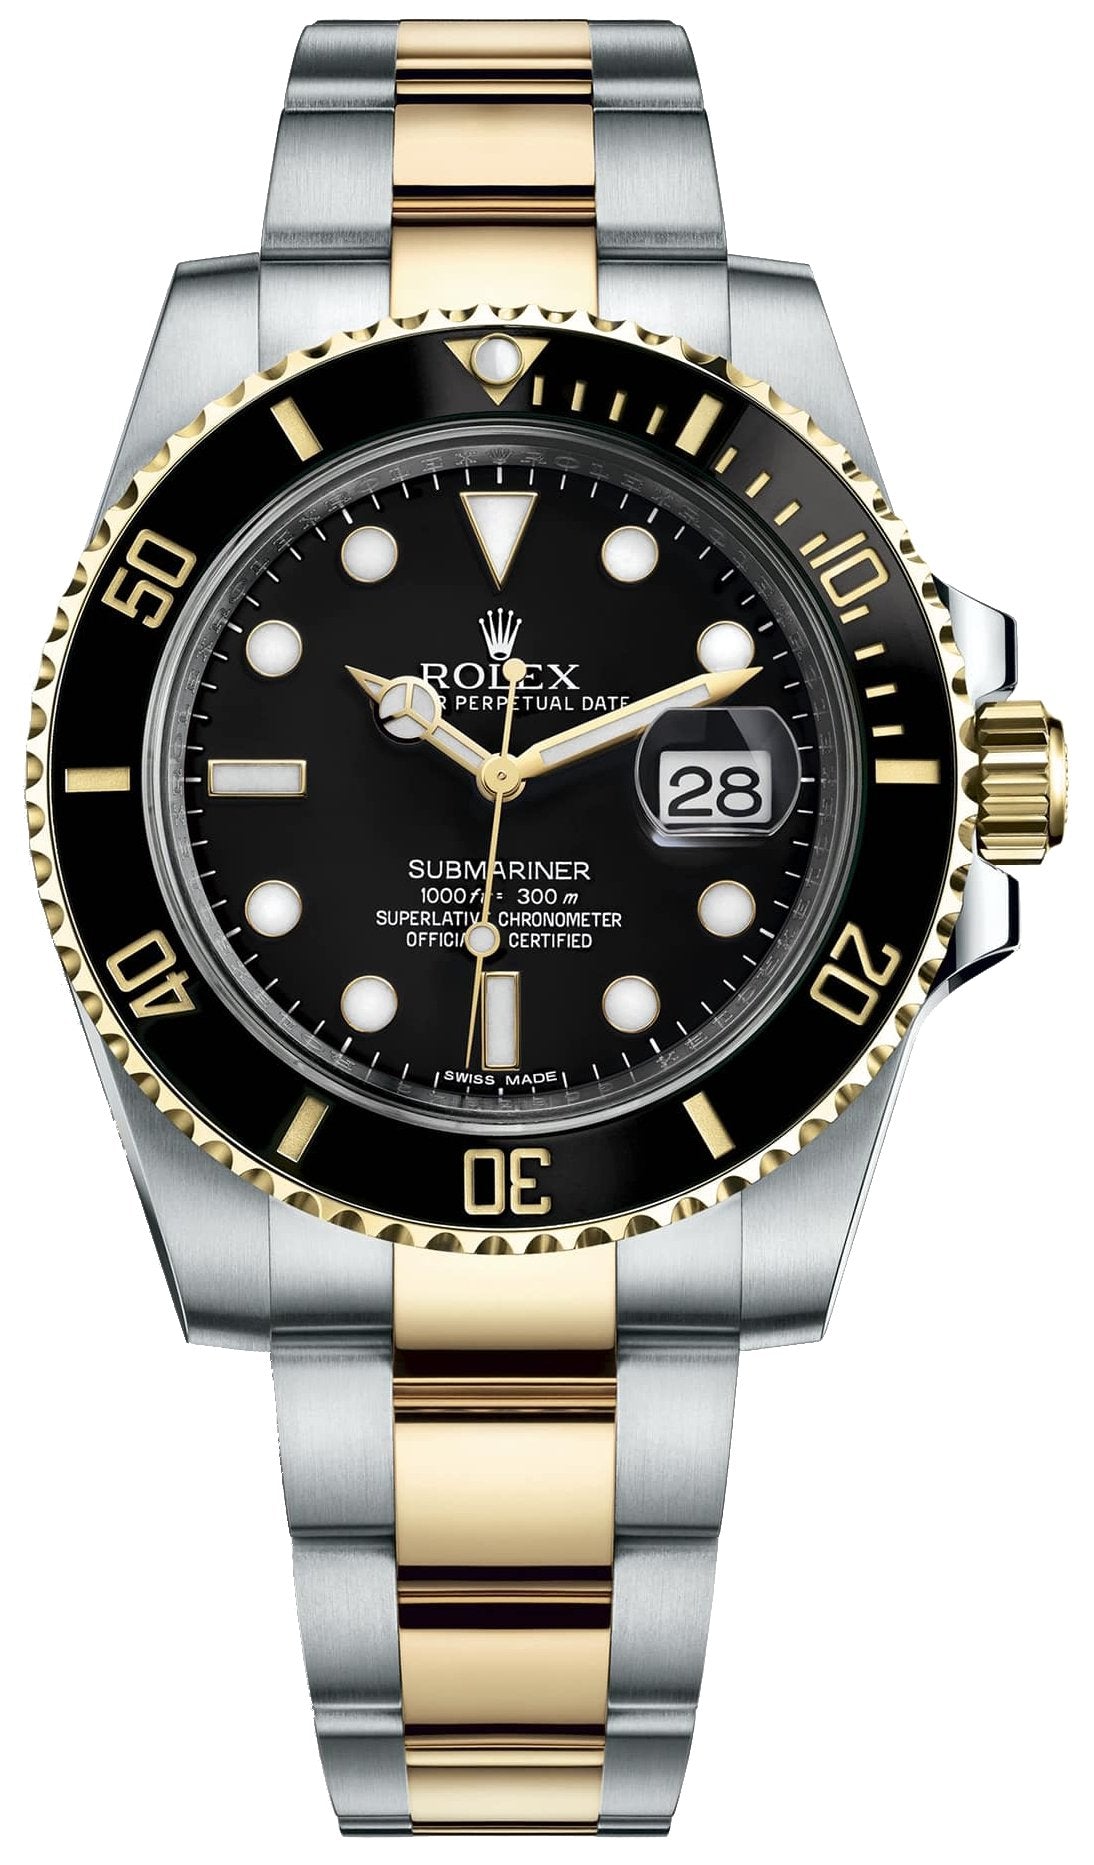 Rolex Submariner Two-Tone Stainless Steel & Yellow Gold - Black Dial Ceramic Bezel (Ref# 126613LN) - WatchesOff5thWatch